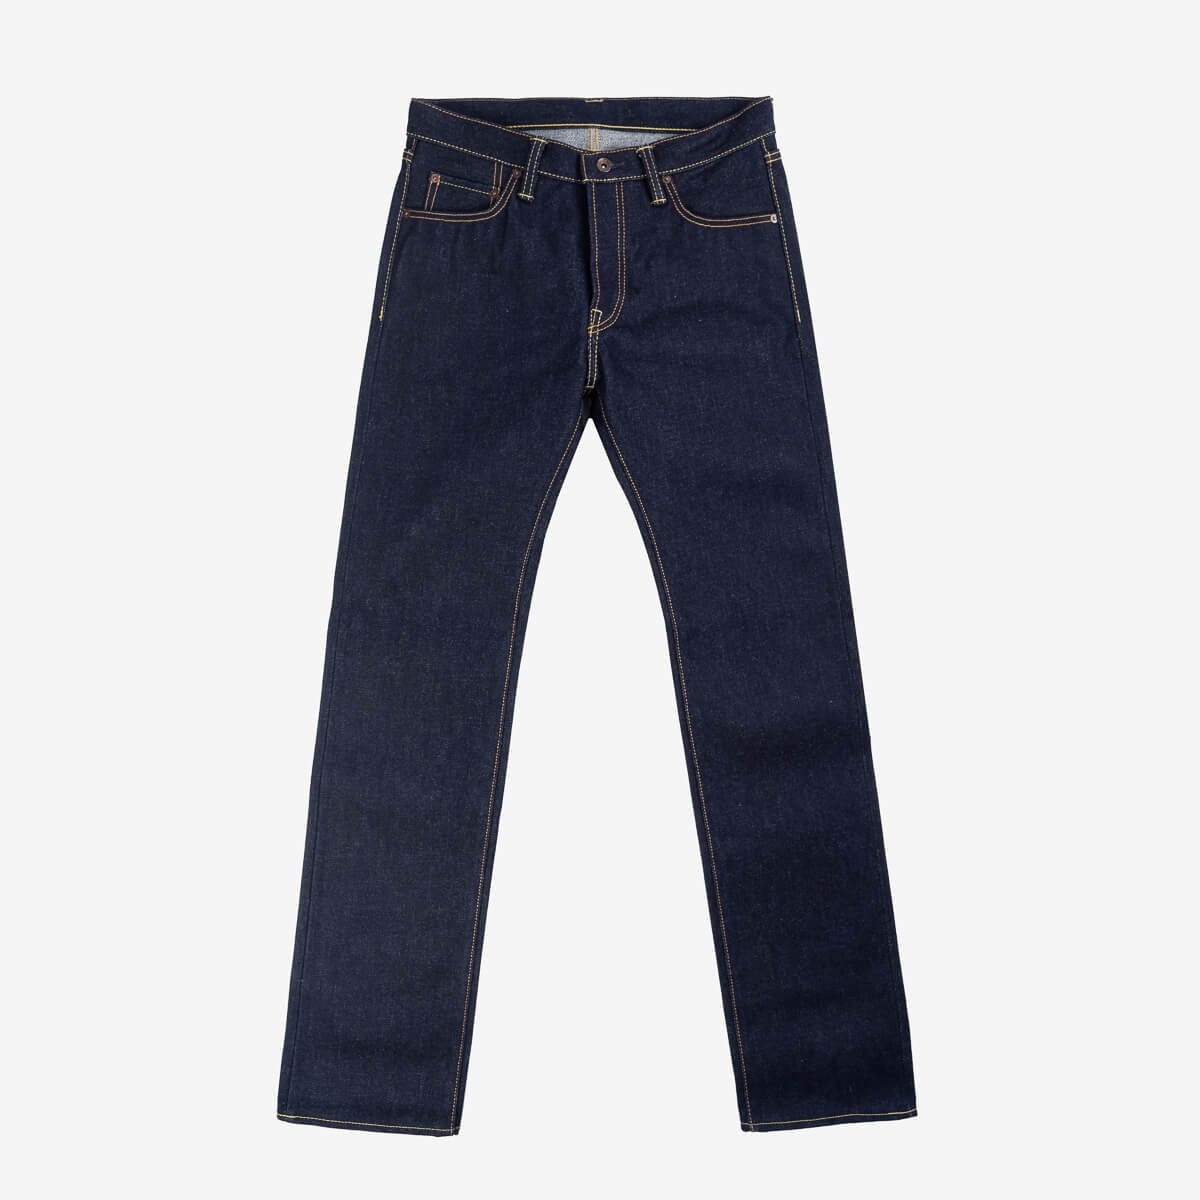 IH-634S-142 - 14oz Selvedge Denim Straight Cut Jeans - Indigo